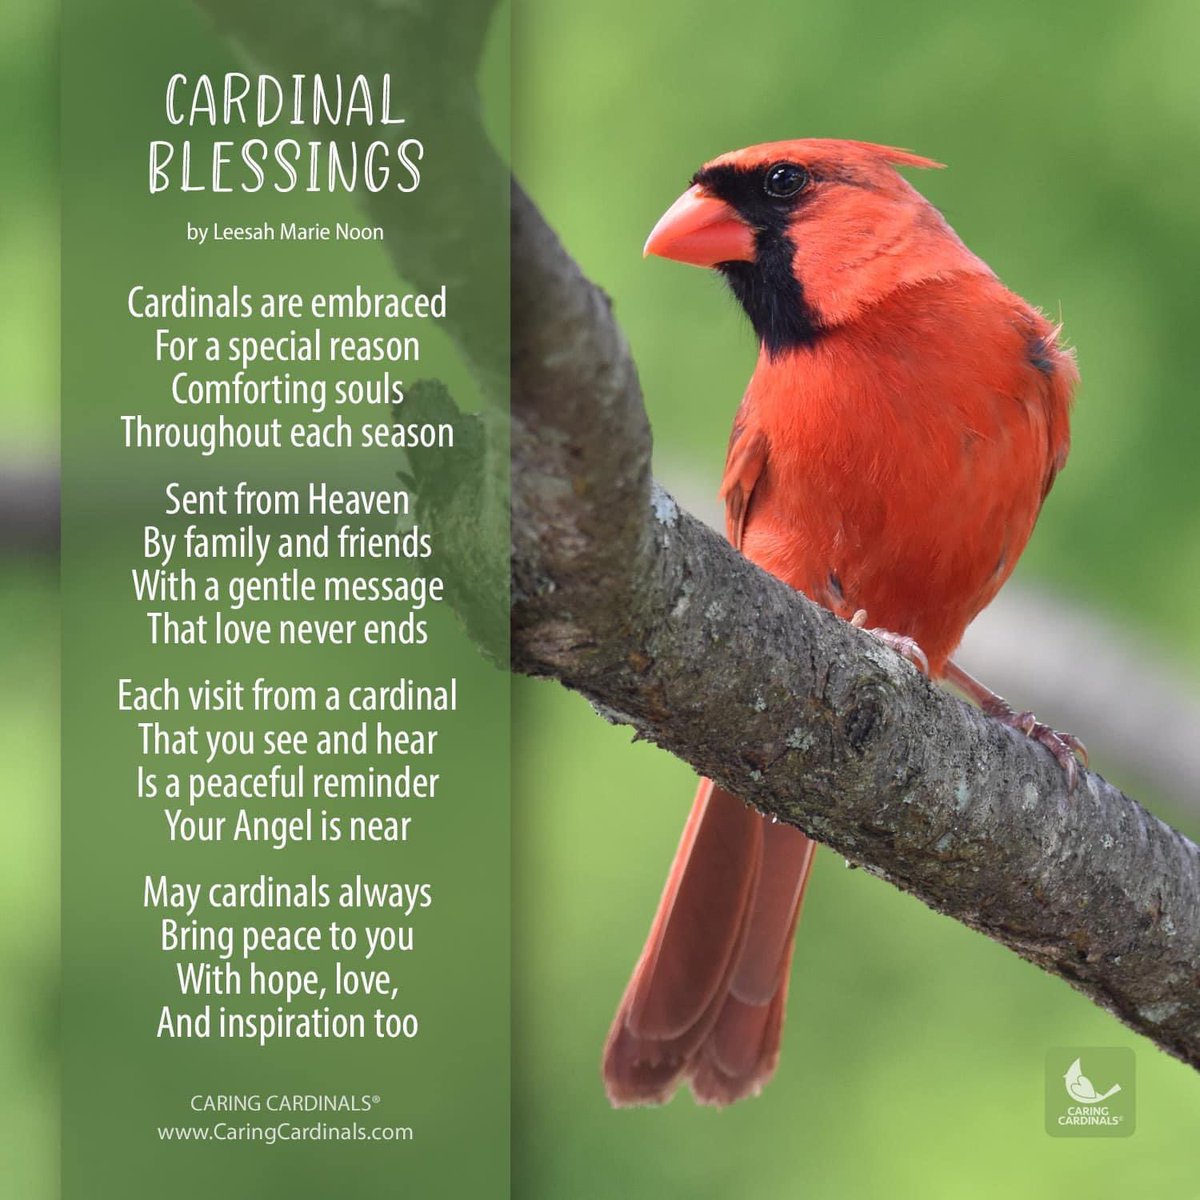 ♥️ Visit CaringCardinals.com for inspirational cardinal stories, poetry, photos, gifts, and more!

#cardinals #angels #signs #heaven #spirituality #caringcardinals #faith #love #hope #god #spiritual #birds #cardinalgifts #memorialgifts #nature #sympathygifts #bereavementgifts